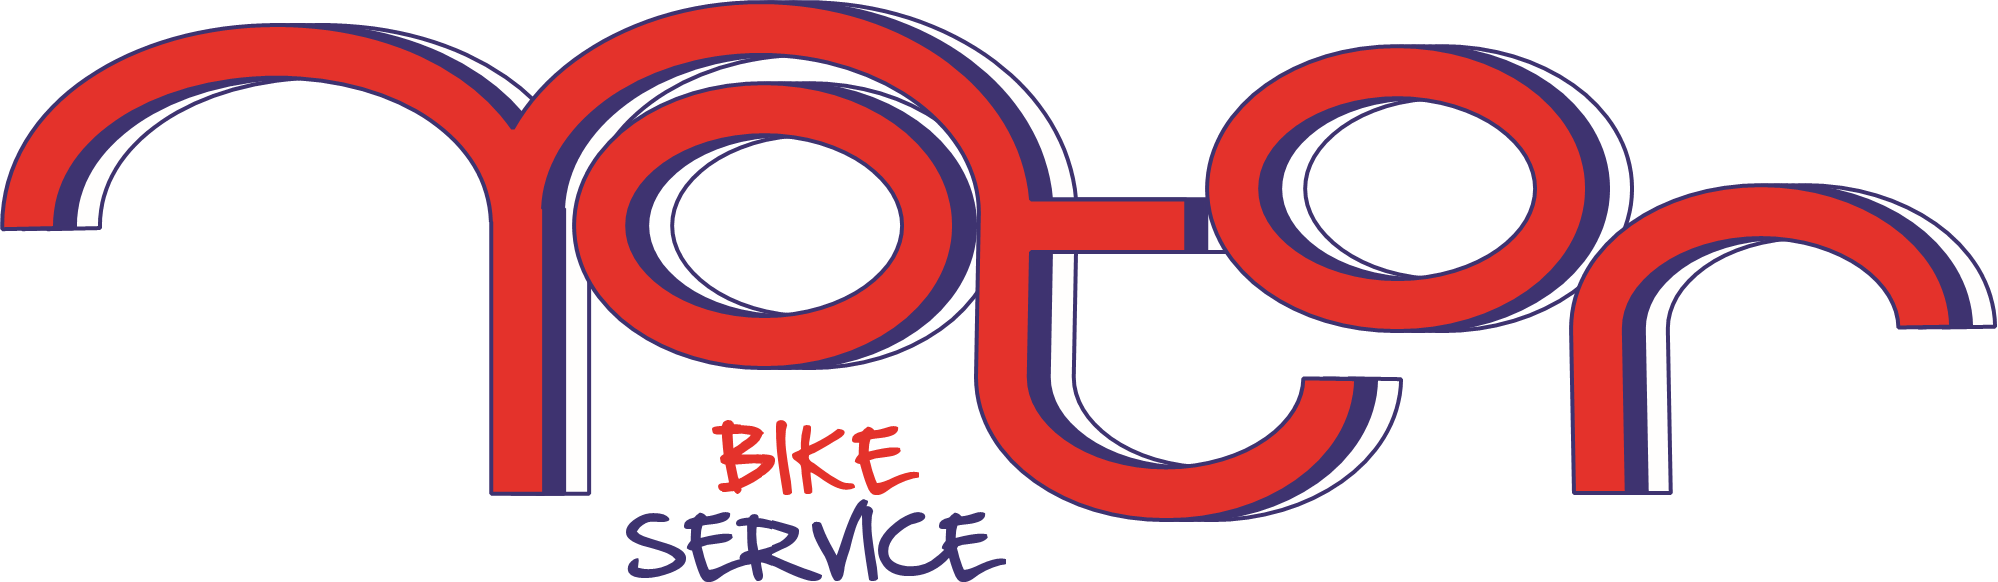 Officina Moto Bologna - Motor Bike Service